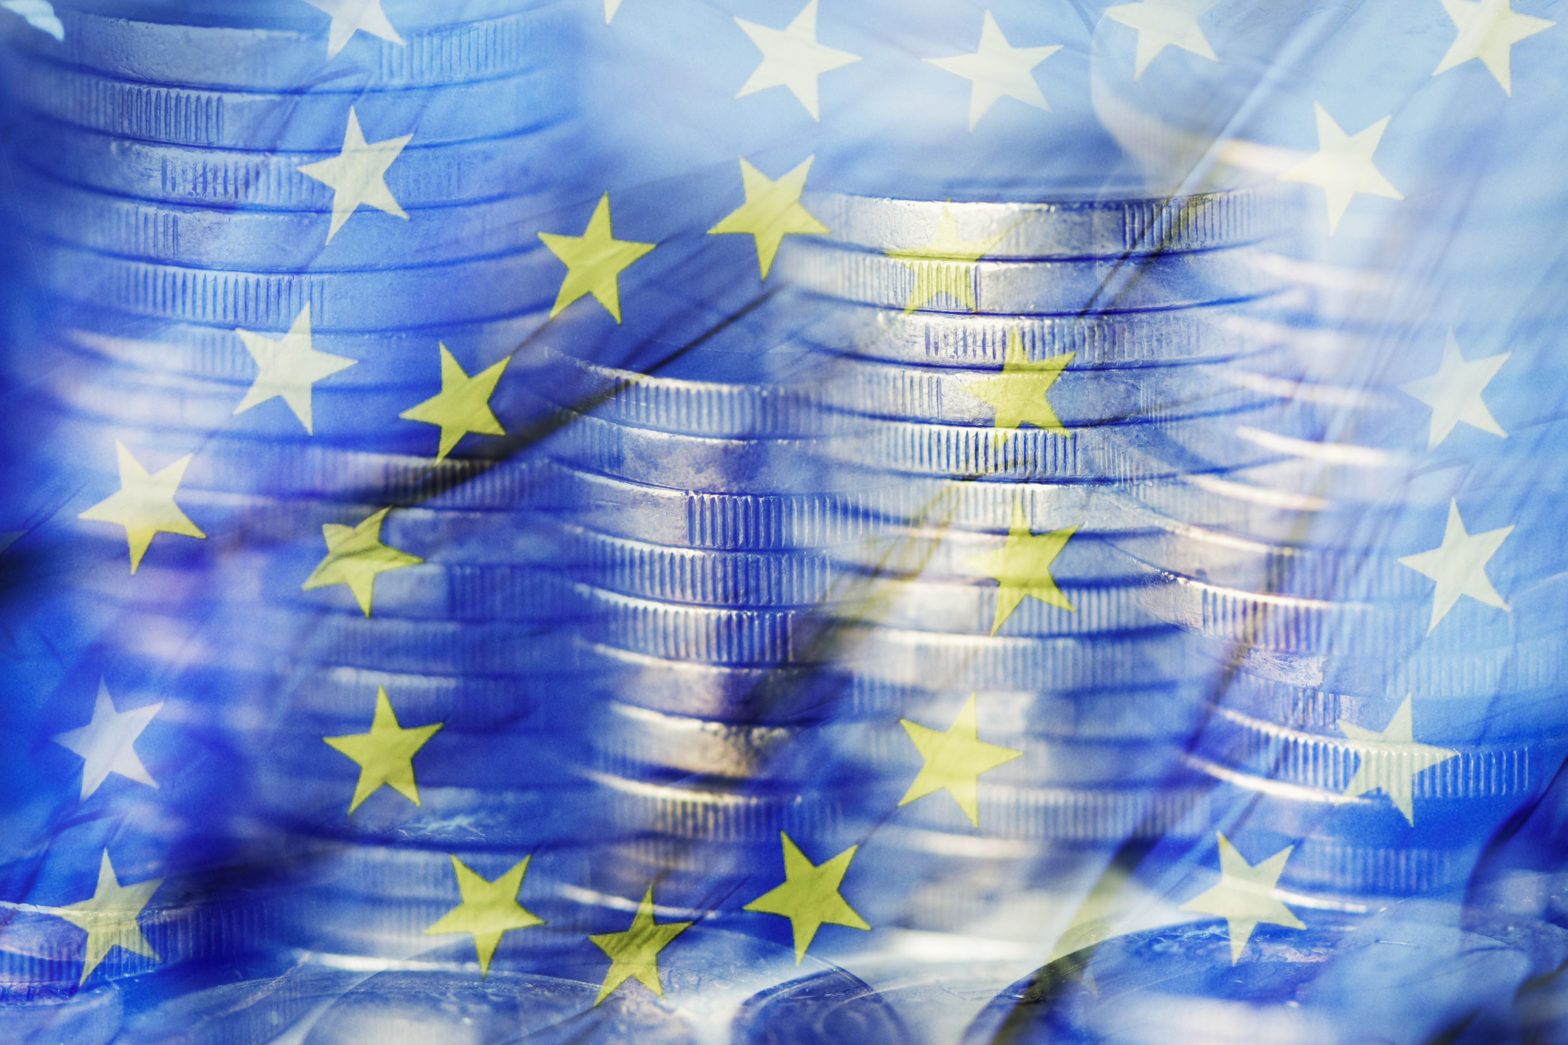 MFS launches European credit fund